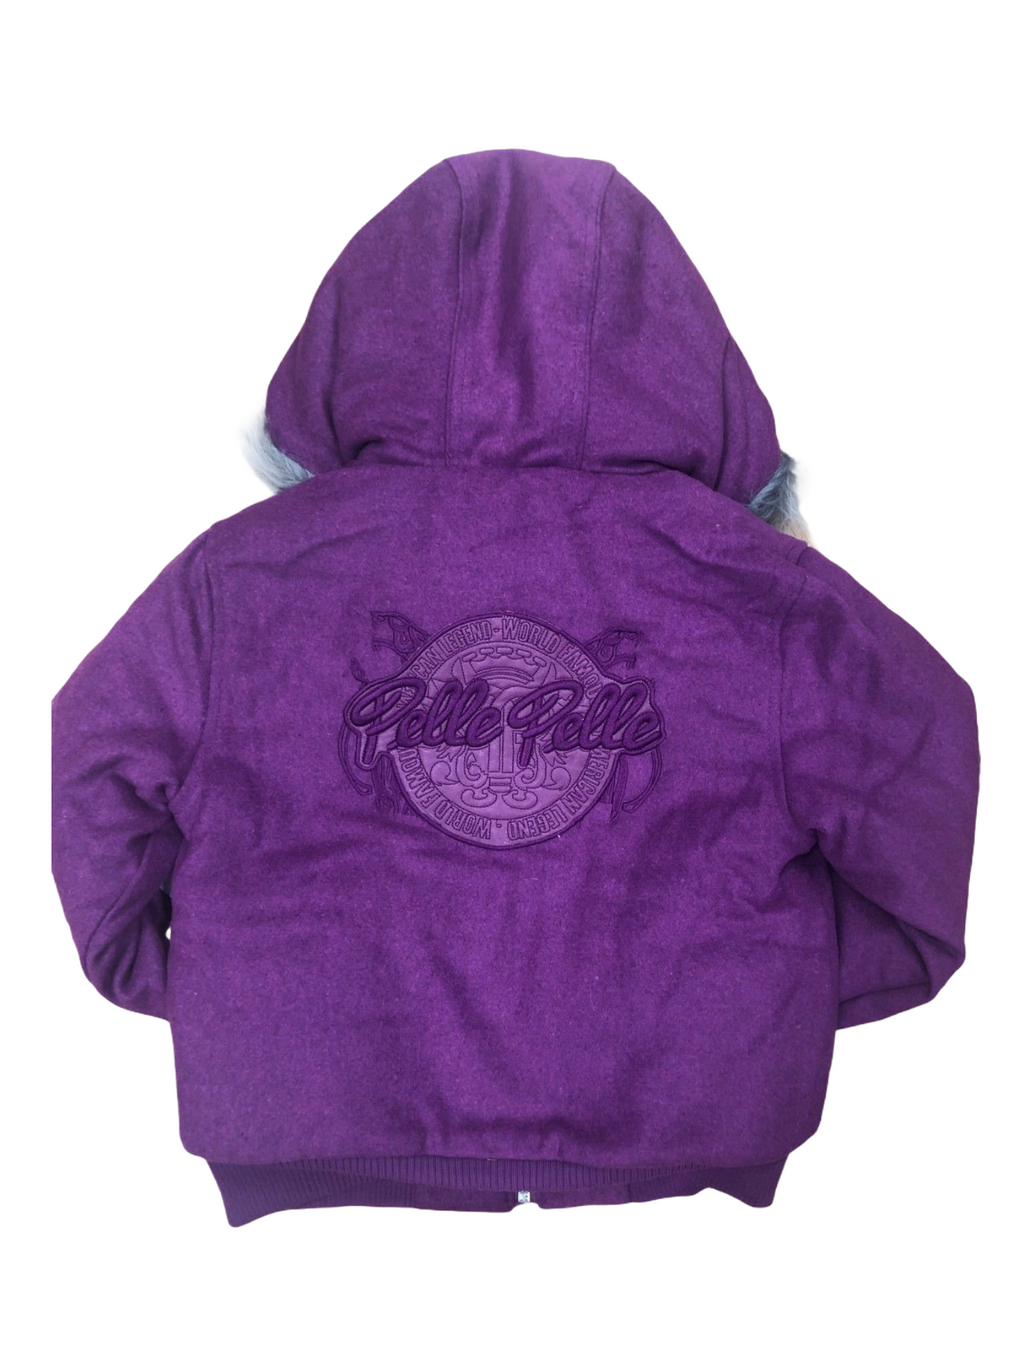 Kids Pelle Pelle Wool Hooded Bomber Jacket - purple